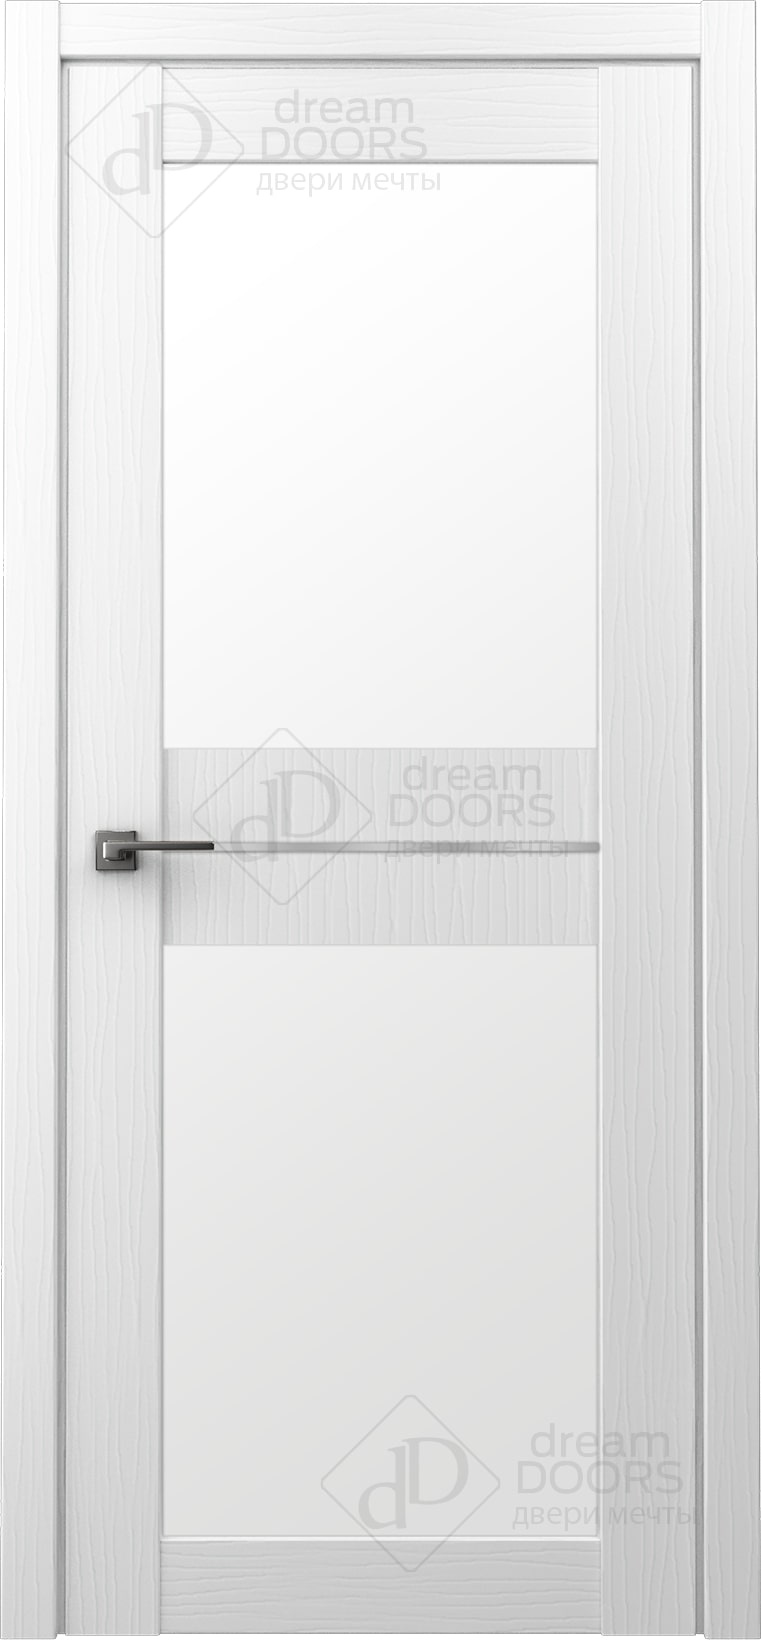 Dream Doors Межкомнатная дверь Престиж 2, арт. 16431 - фото №2